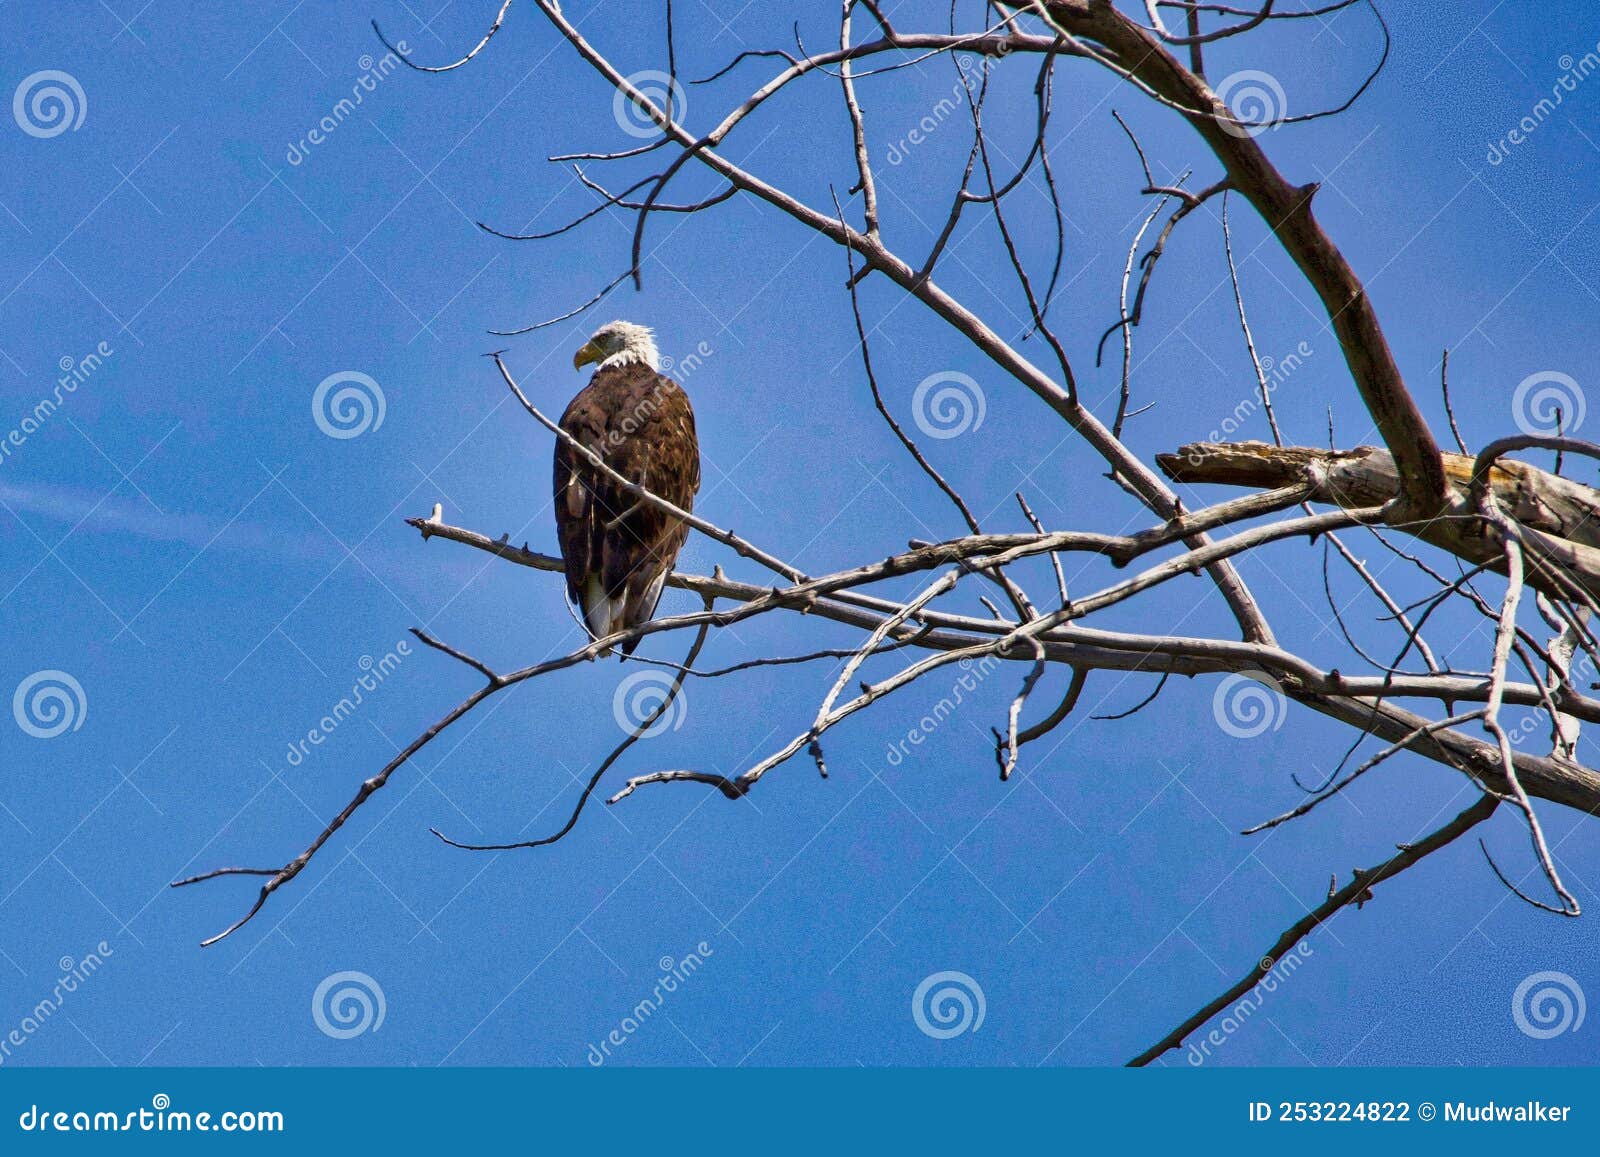 águila de cottonwood seca foto de archivo. Imagen de barrancas - 253224822